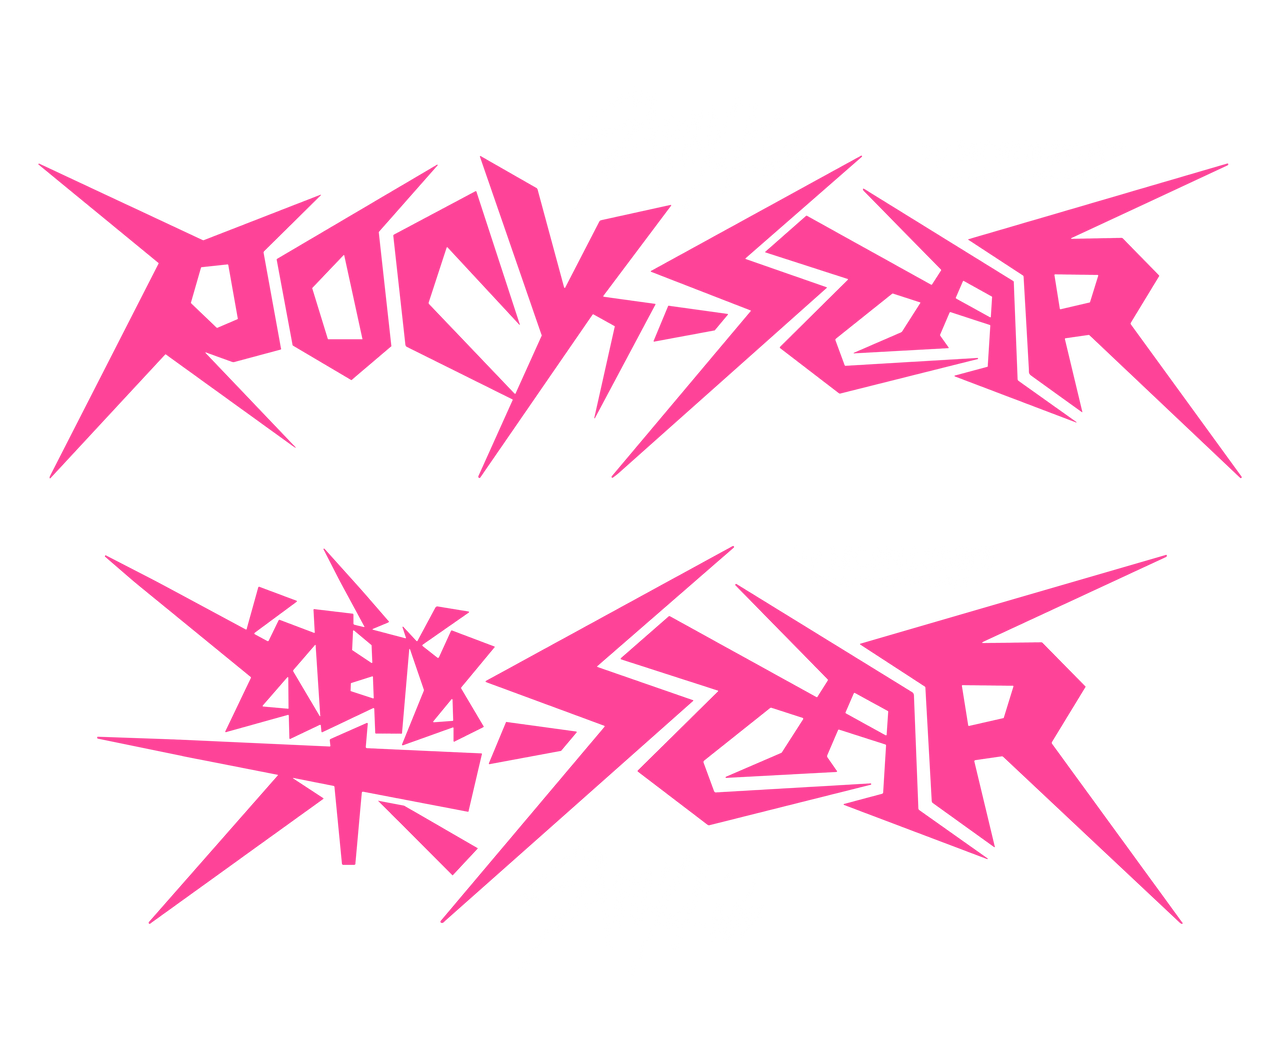 Stray Kids - ROCK-STAR Logo in PNG by moonlightld on DeviantArt